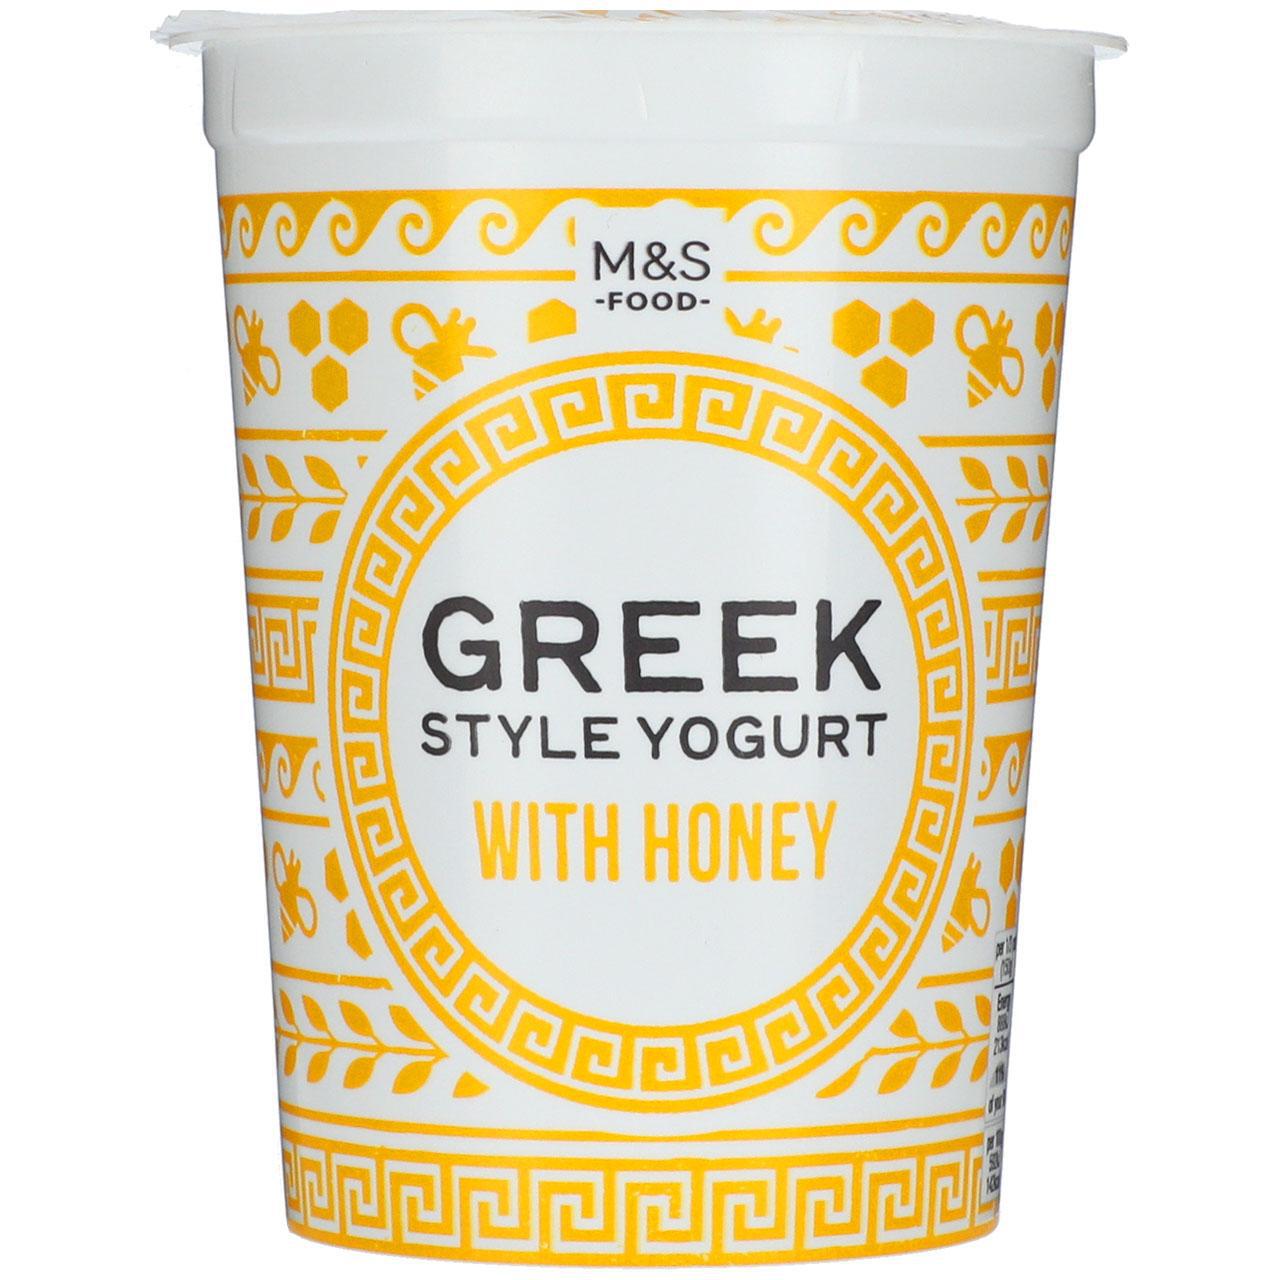 M&S Greek Style Live Yogurt with Honey 450g